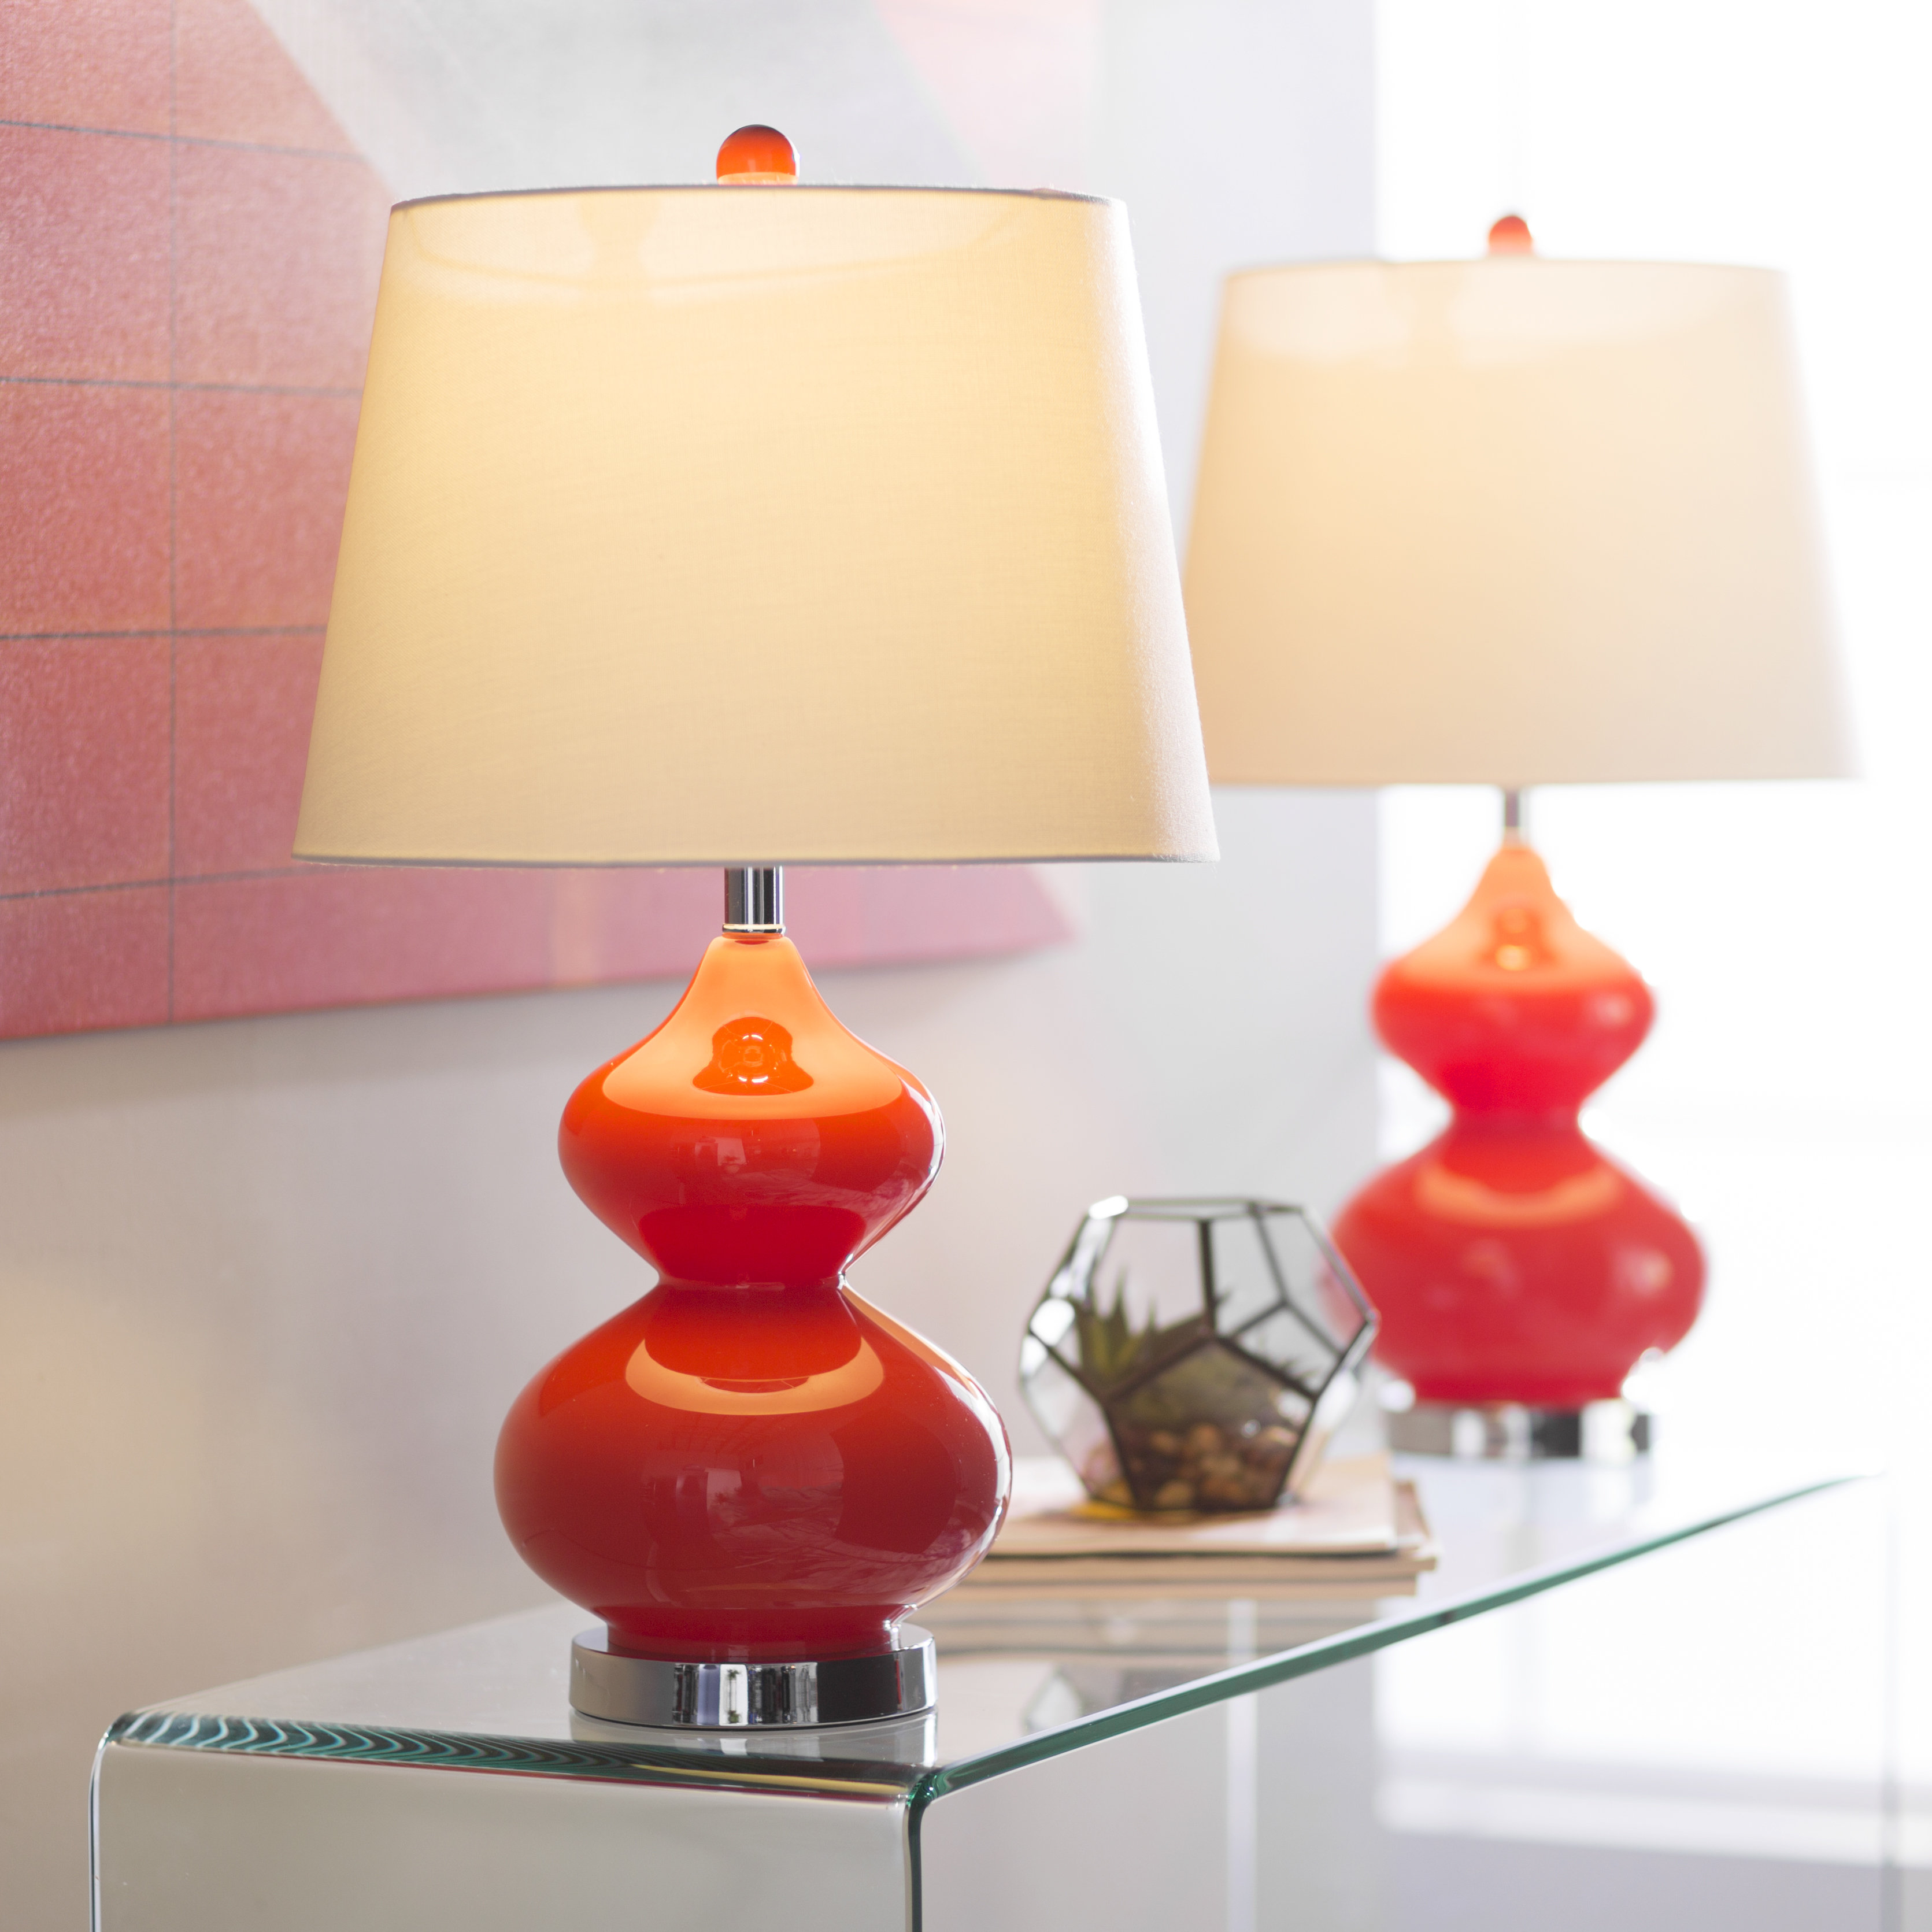 courtney ceramic table lamp